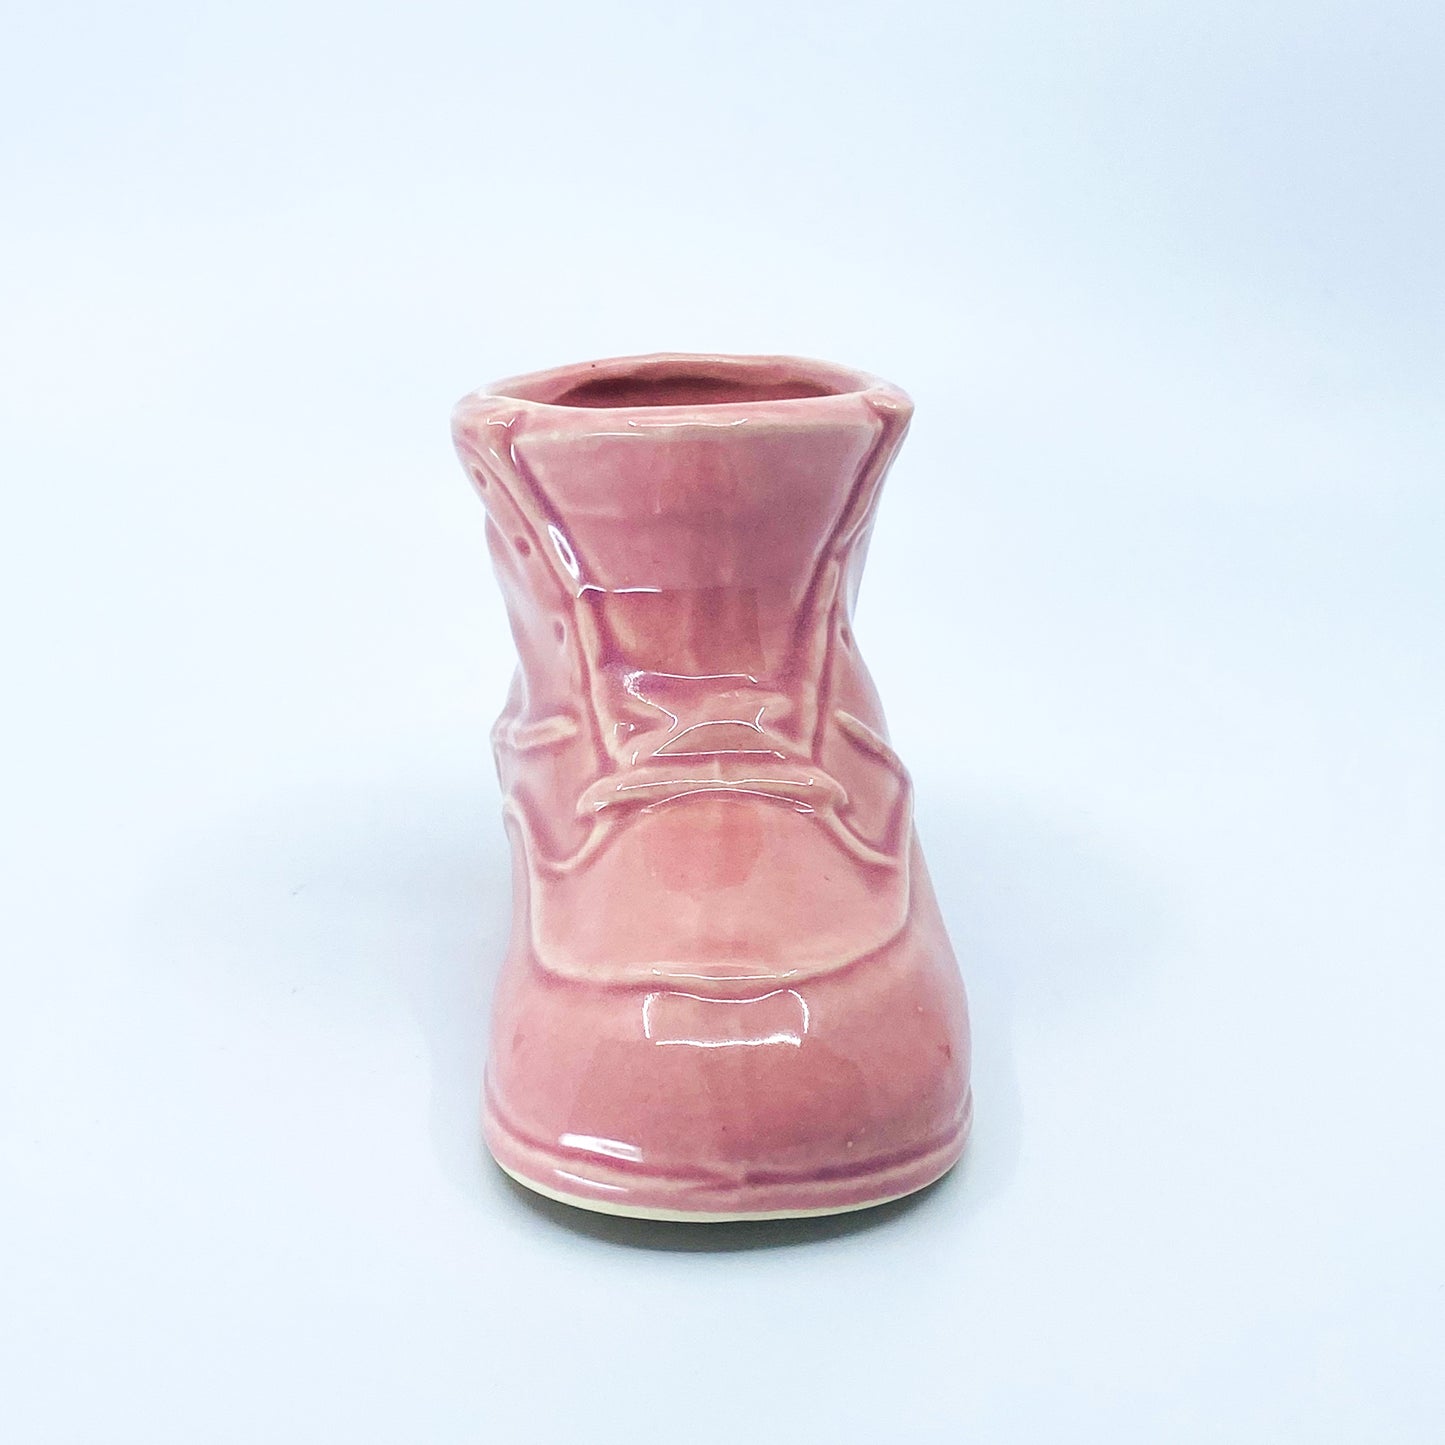 Cutest Ceramic Baby Boot Planter